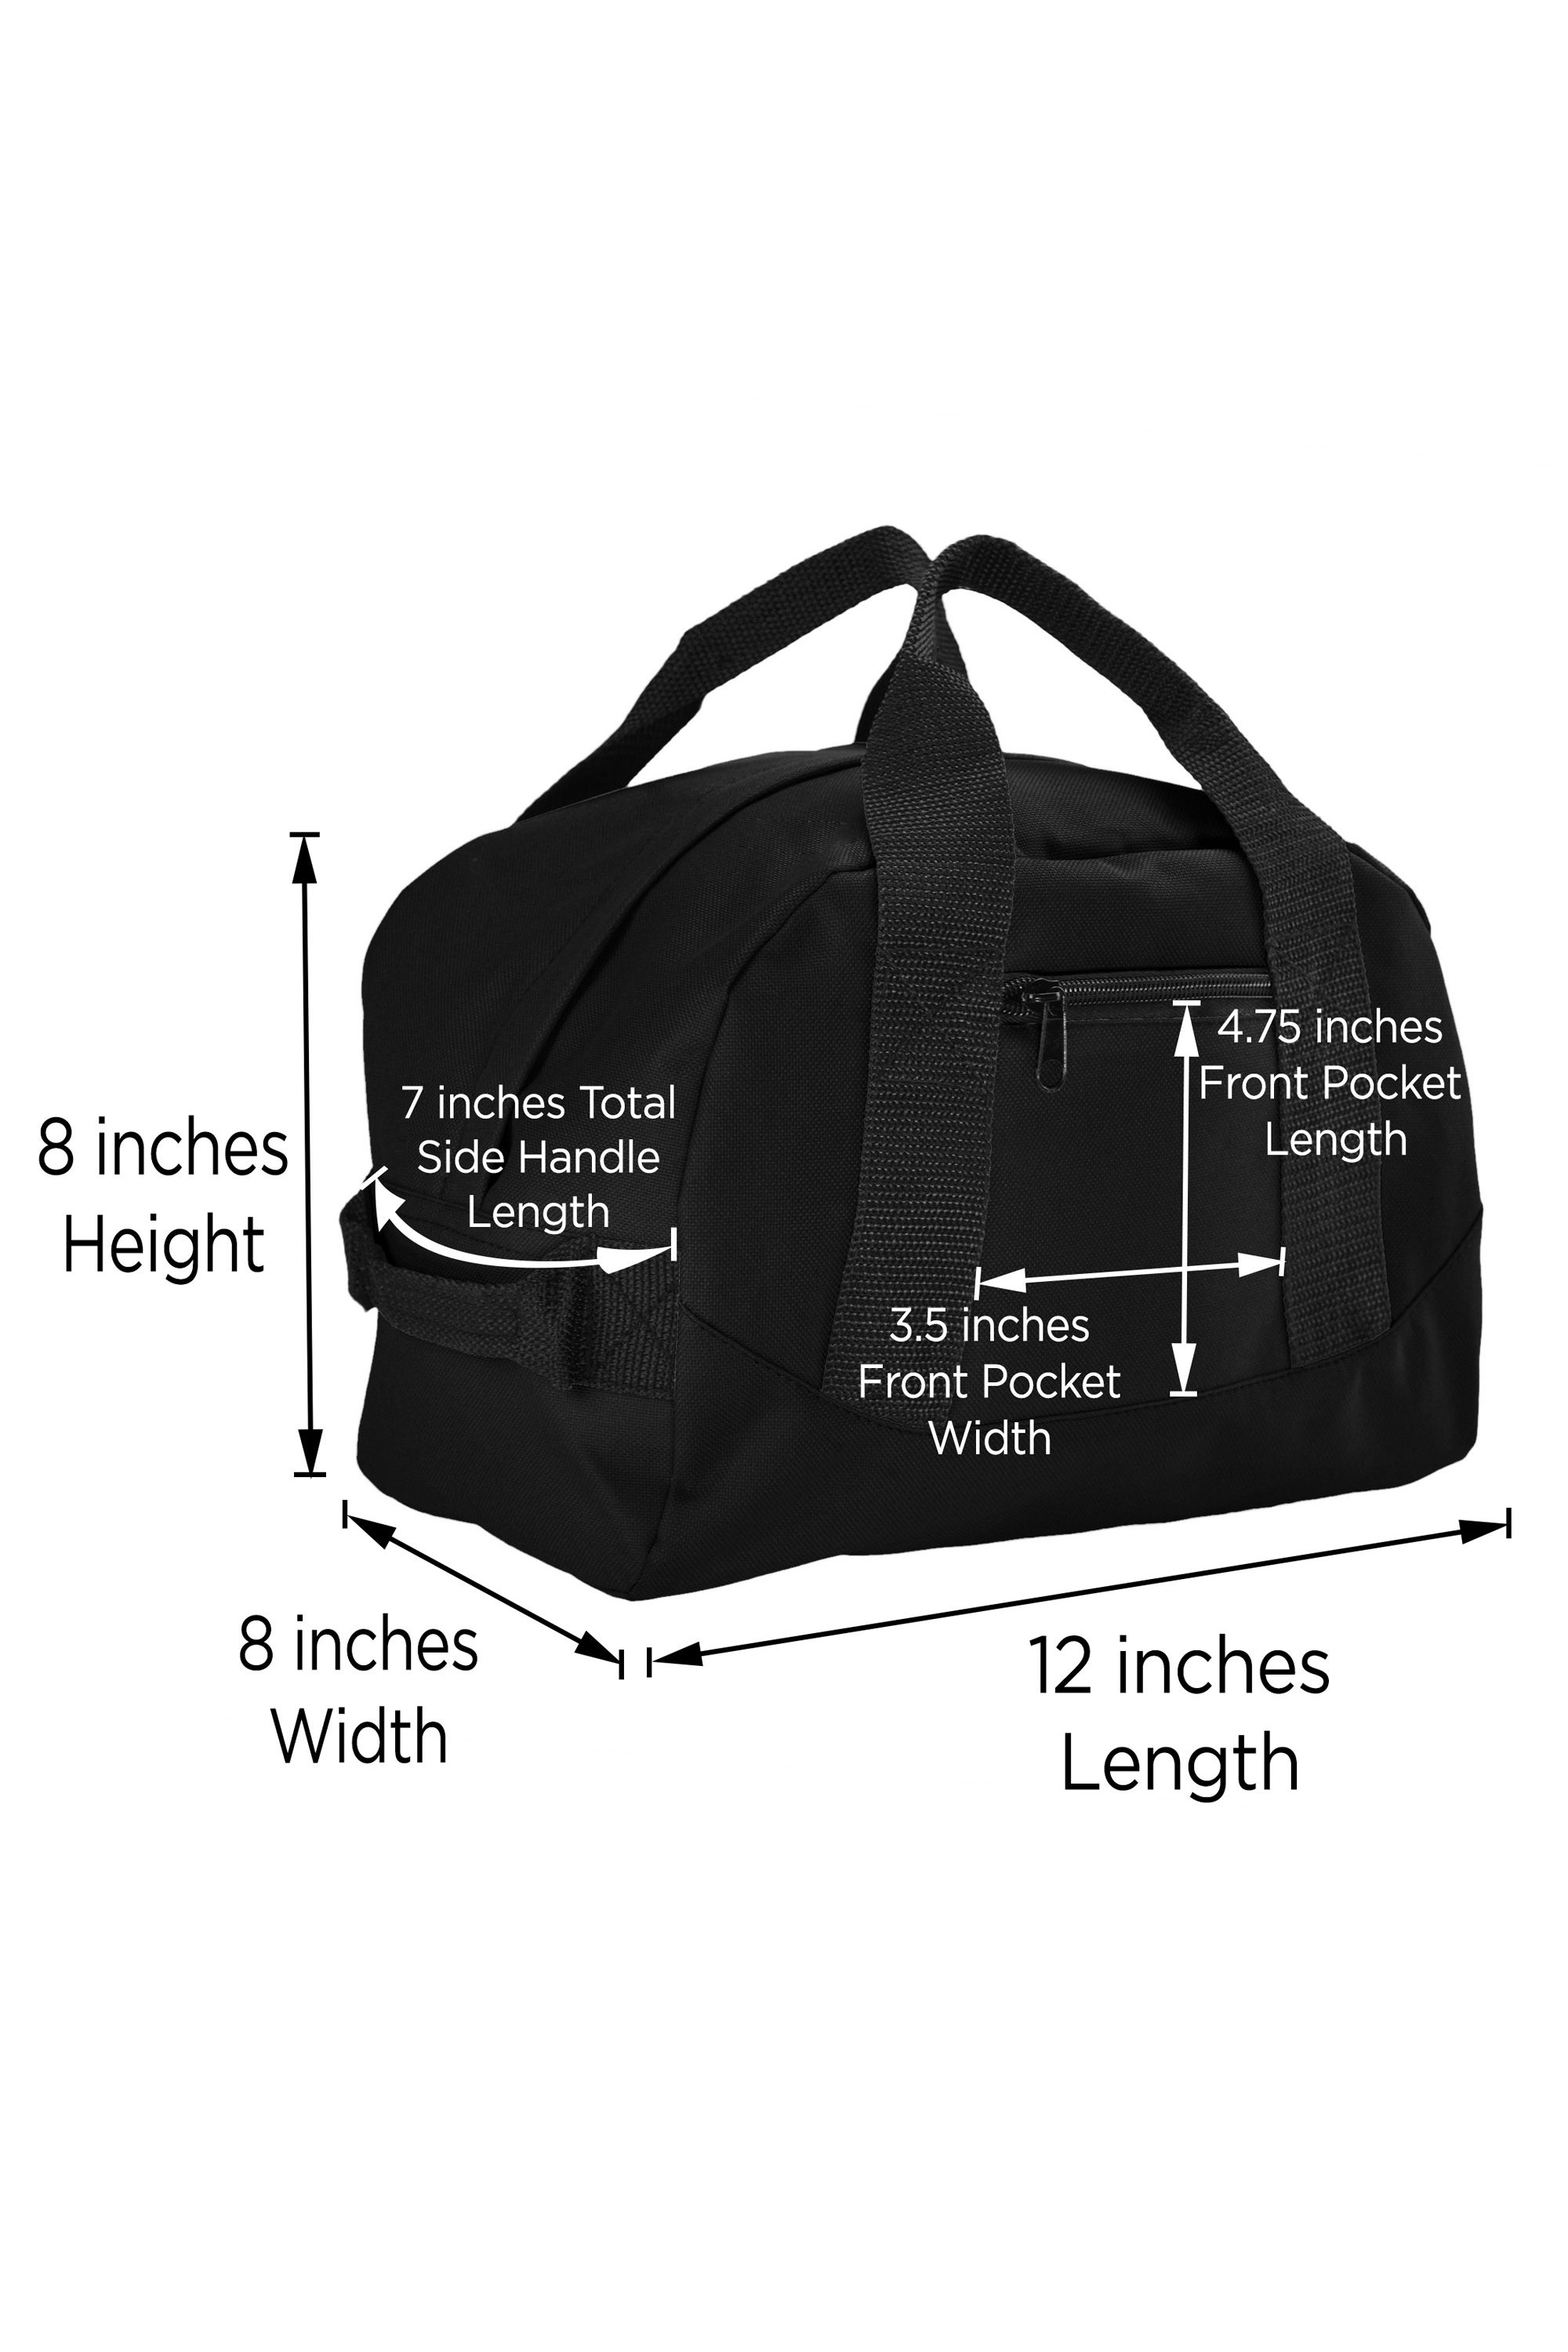 DALIX 12" Mini Duffel Bag Gym Duffle in Black - image 5 of 8